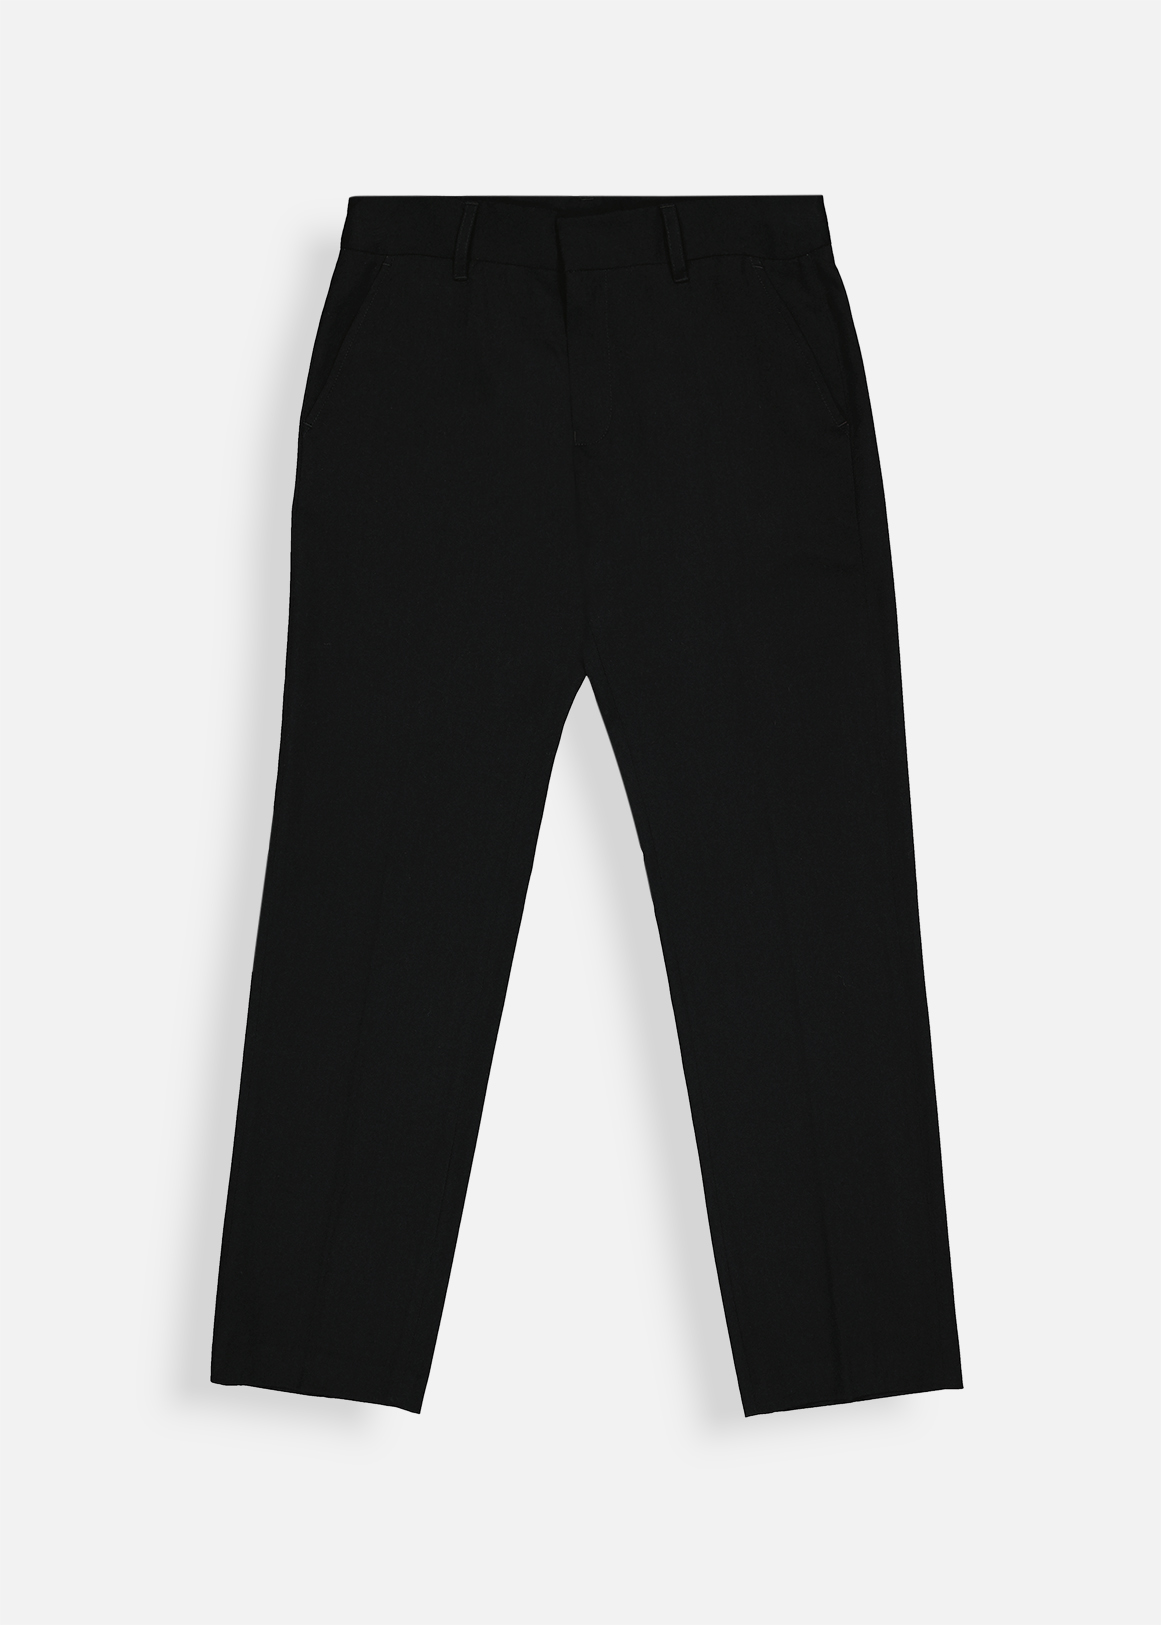 Adjustable Black Suit Pants | Woolworths.co.za